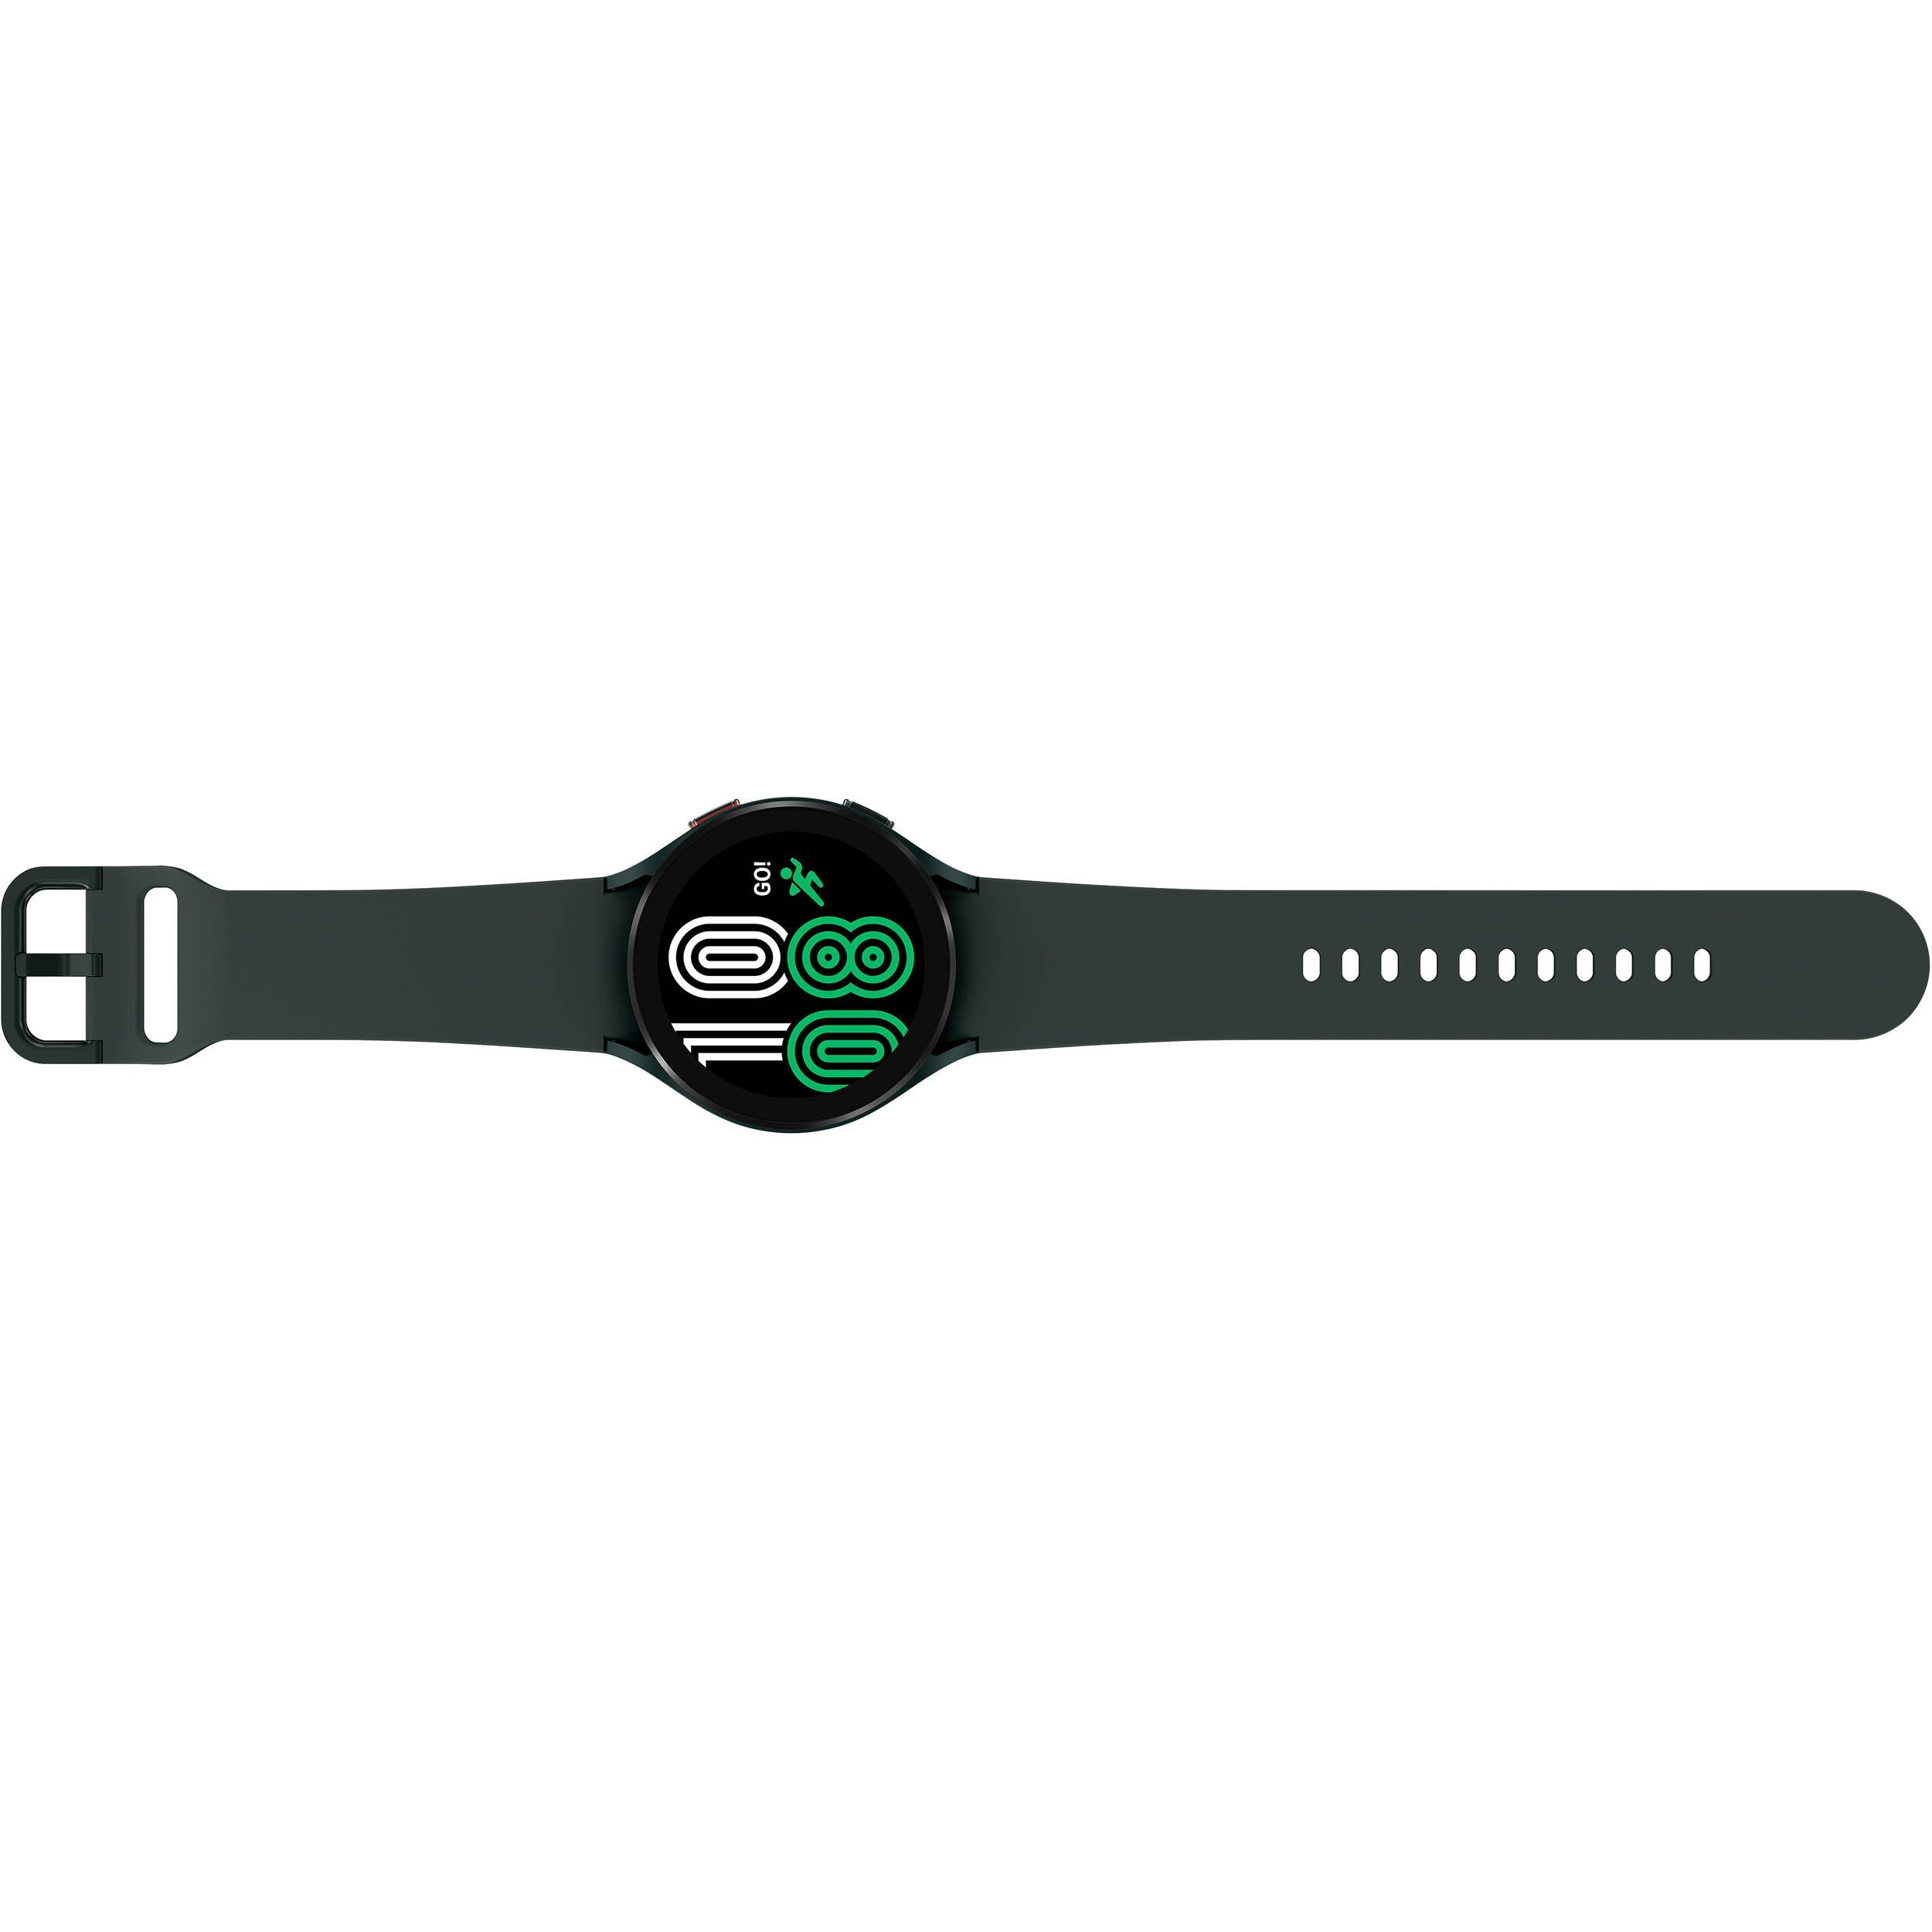 Samsung SM-R870NZGAXAA-RB Galaxy Watch4 44mm Bluetooth, Green - Certified Refurbished